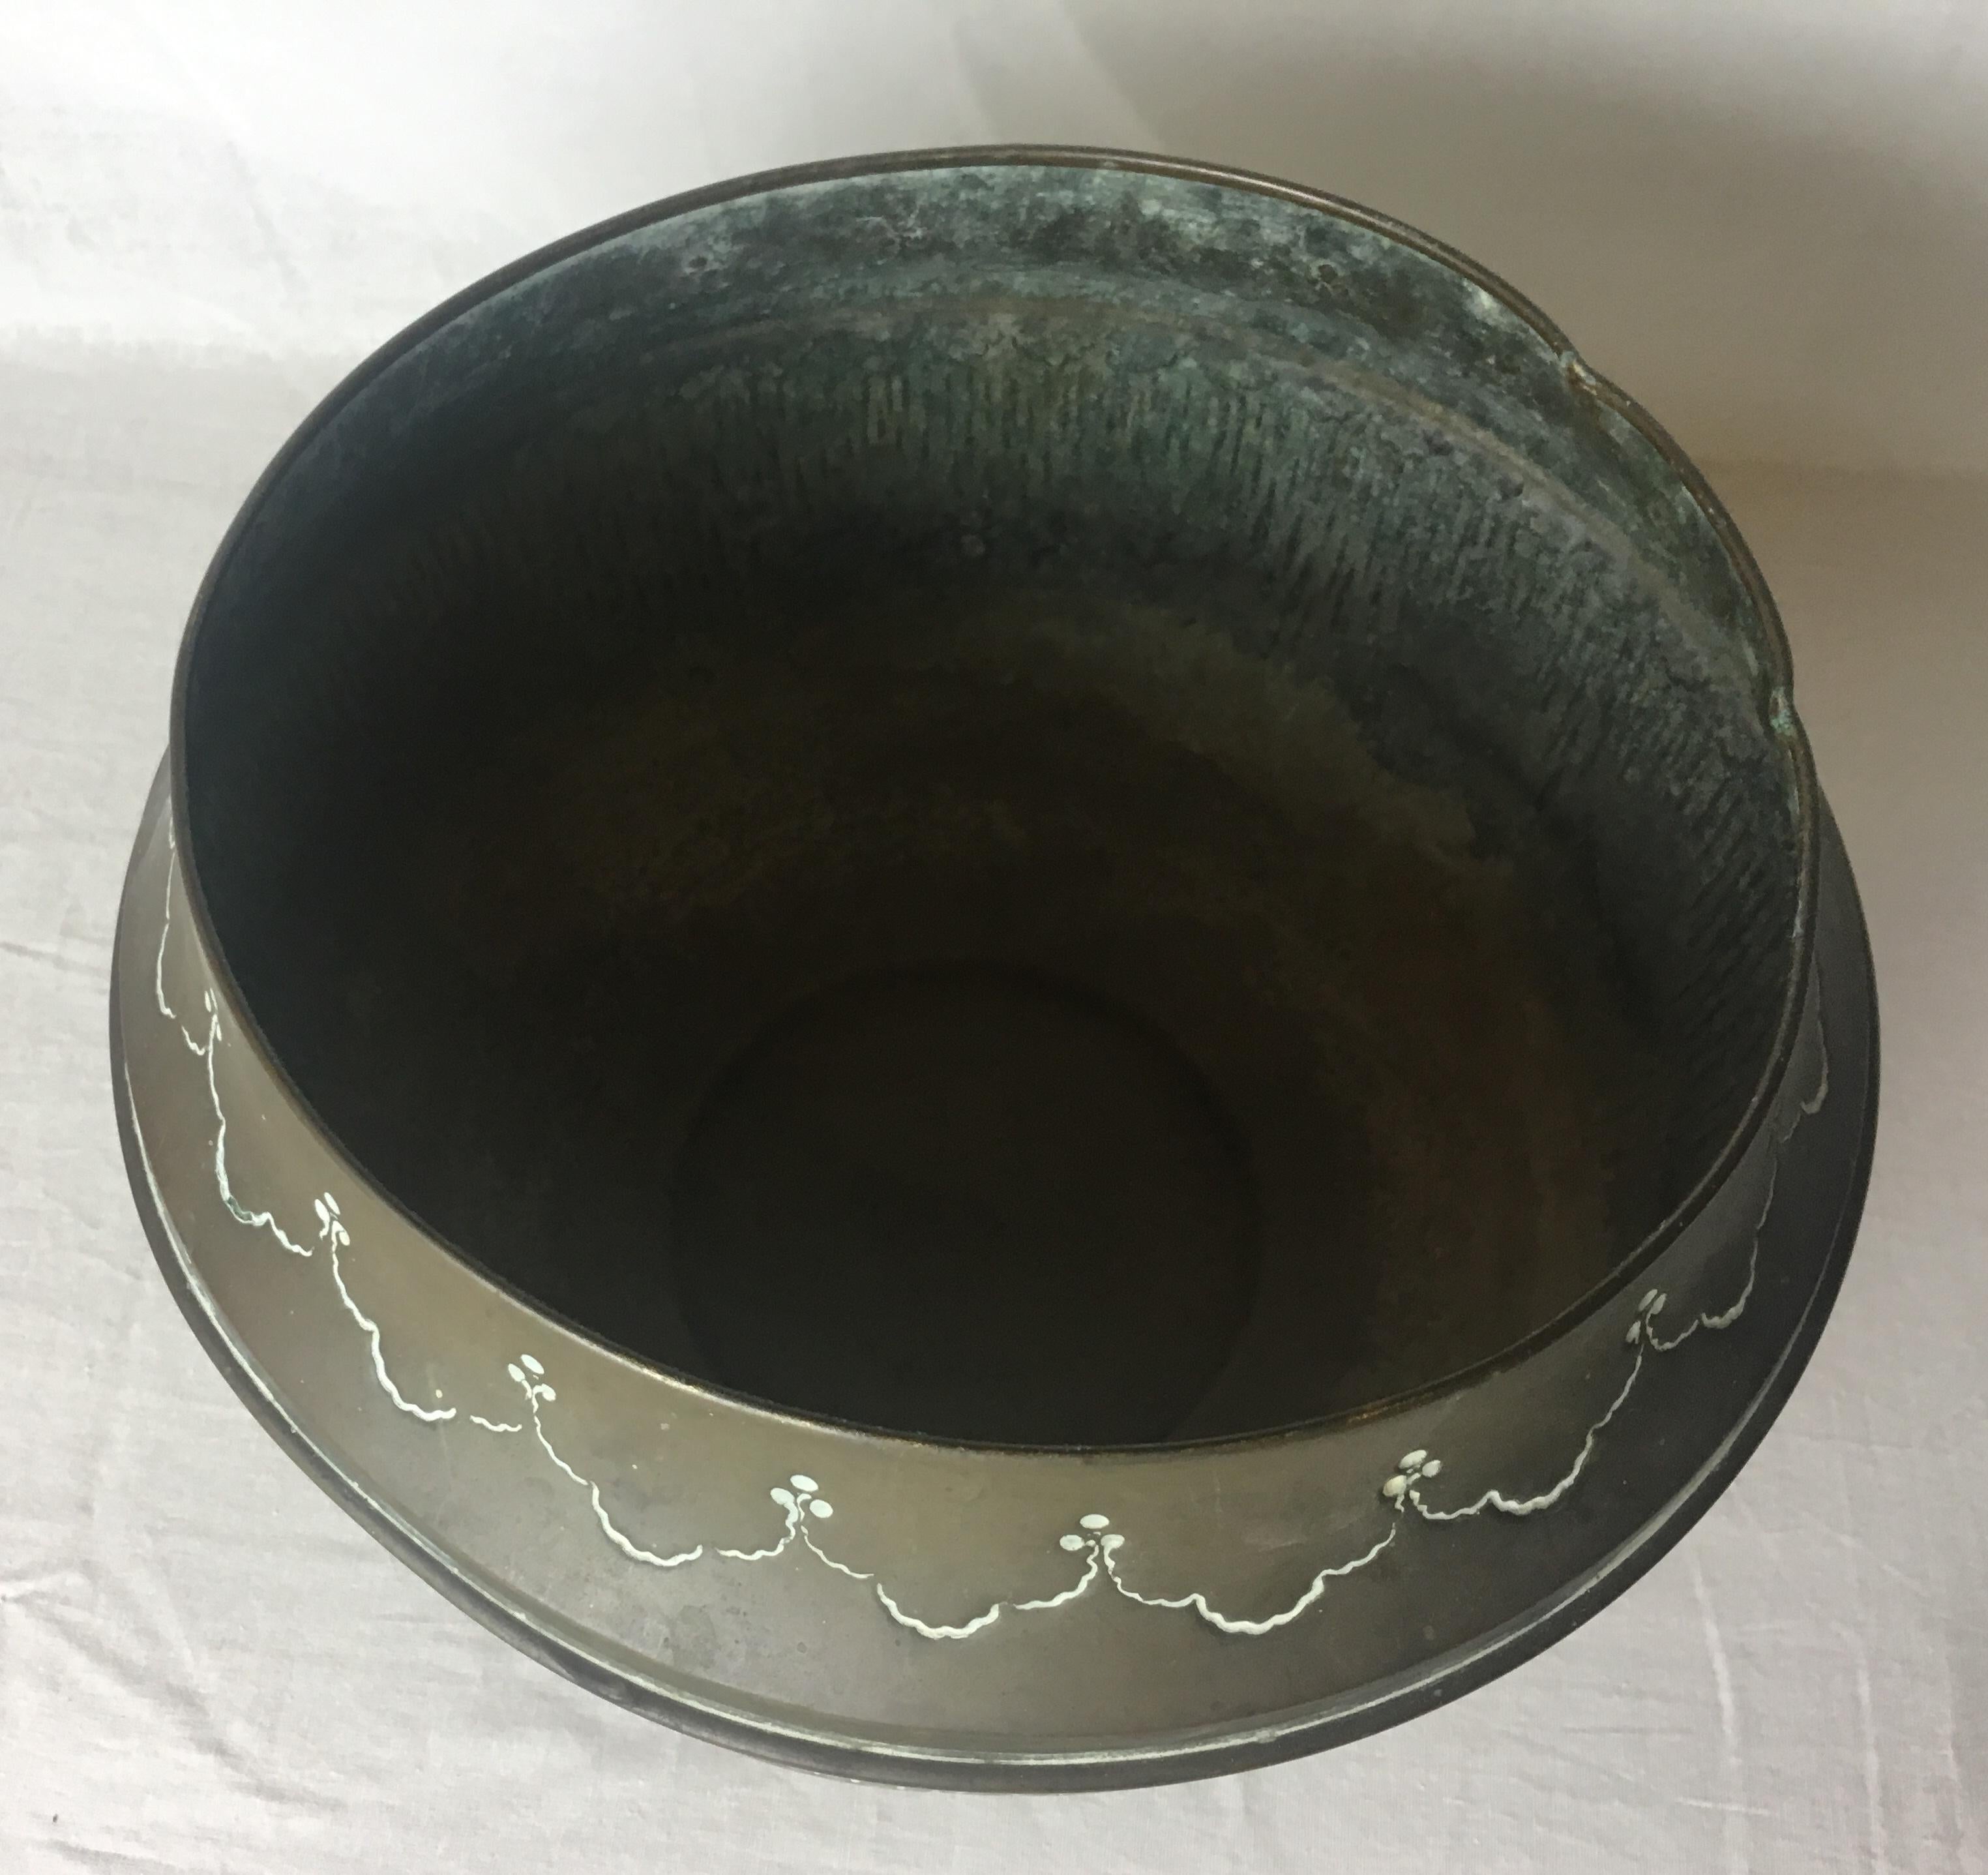 Art Deco Handcrafted Decorative Copper Pot or Bowl 1